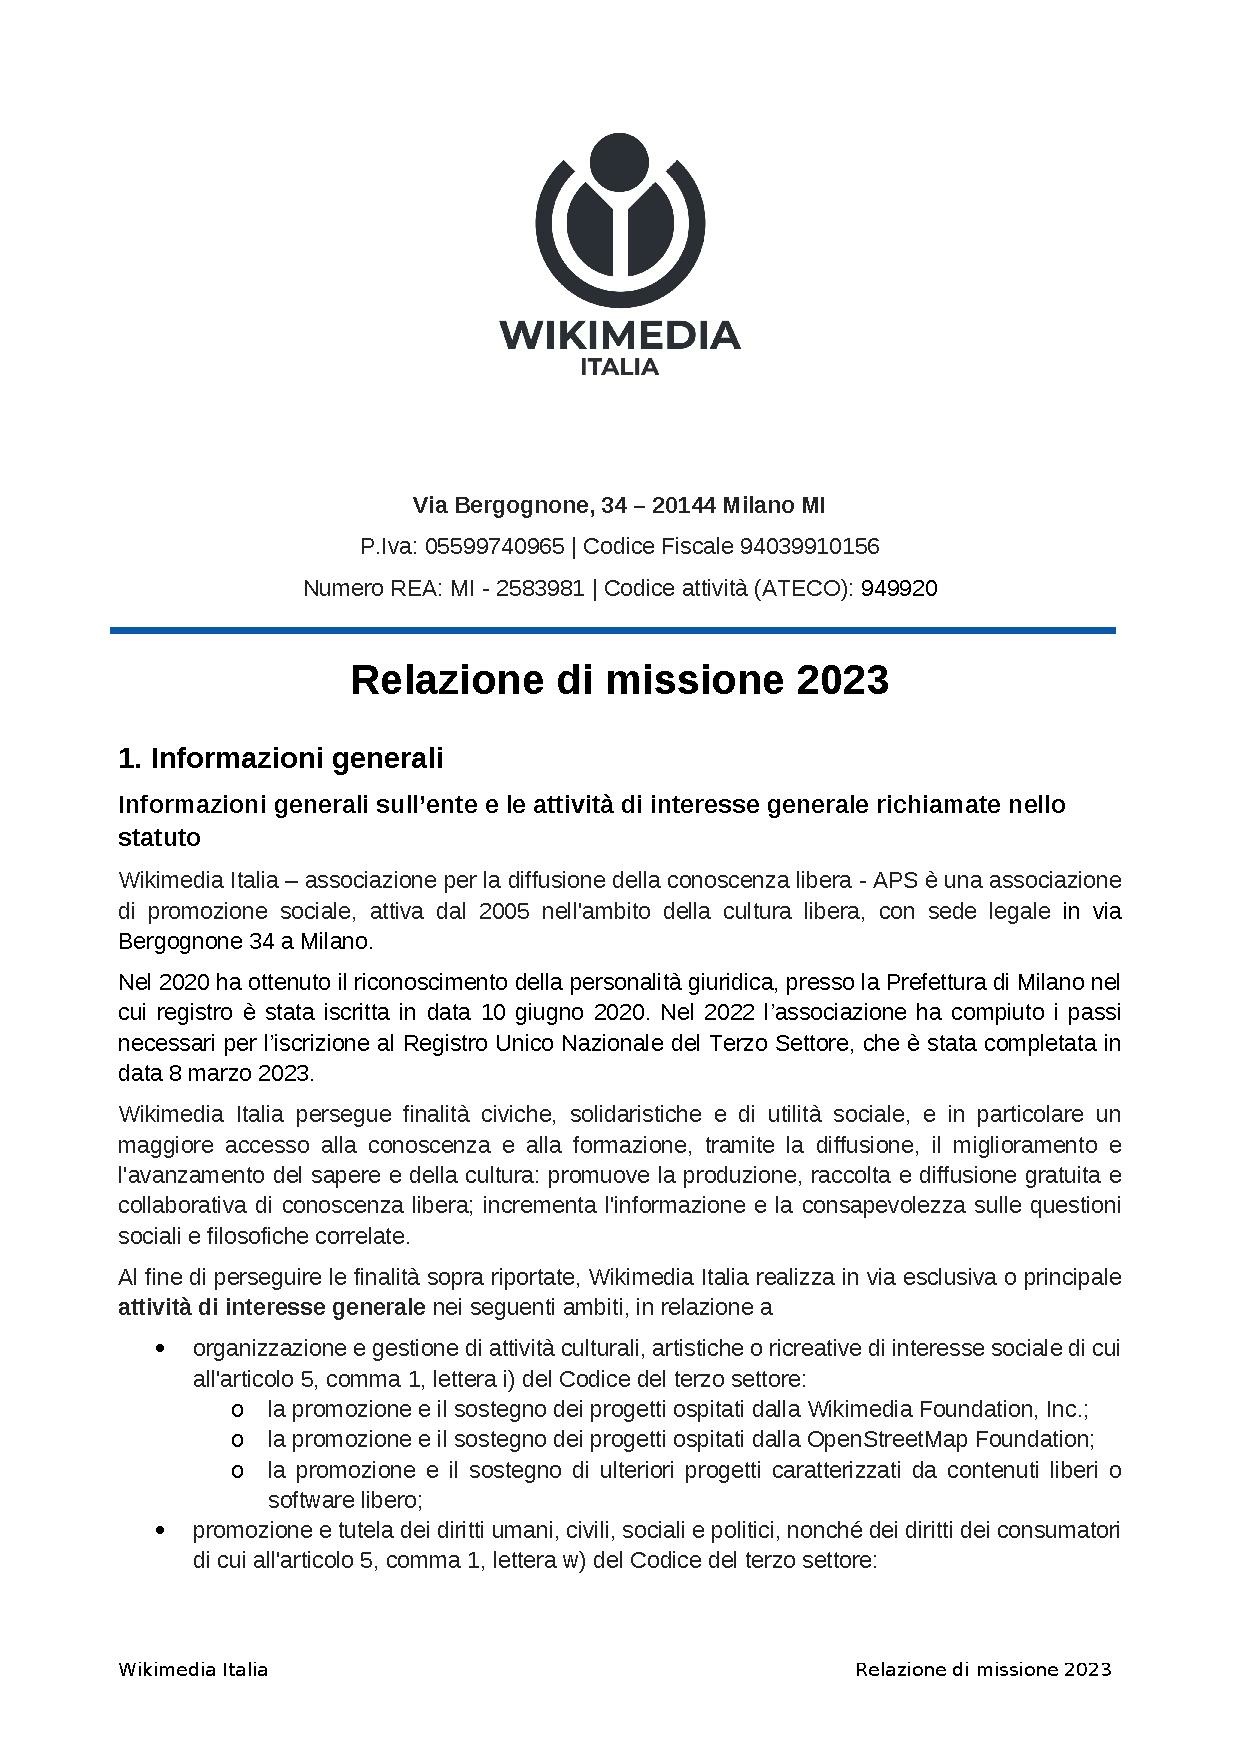 WMI Relazione di missione 2023.pdf